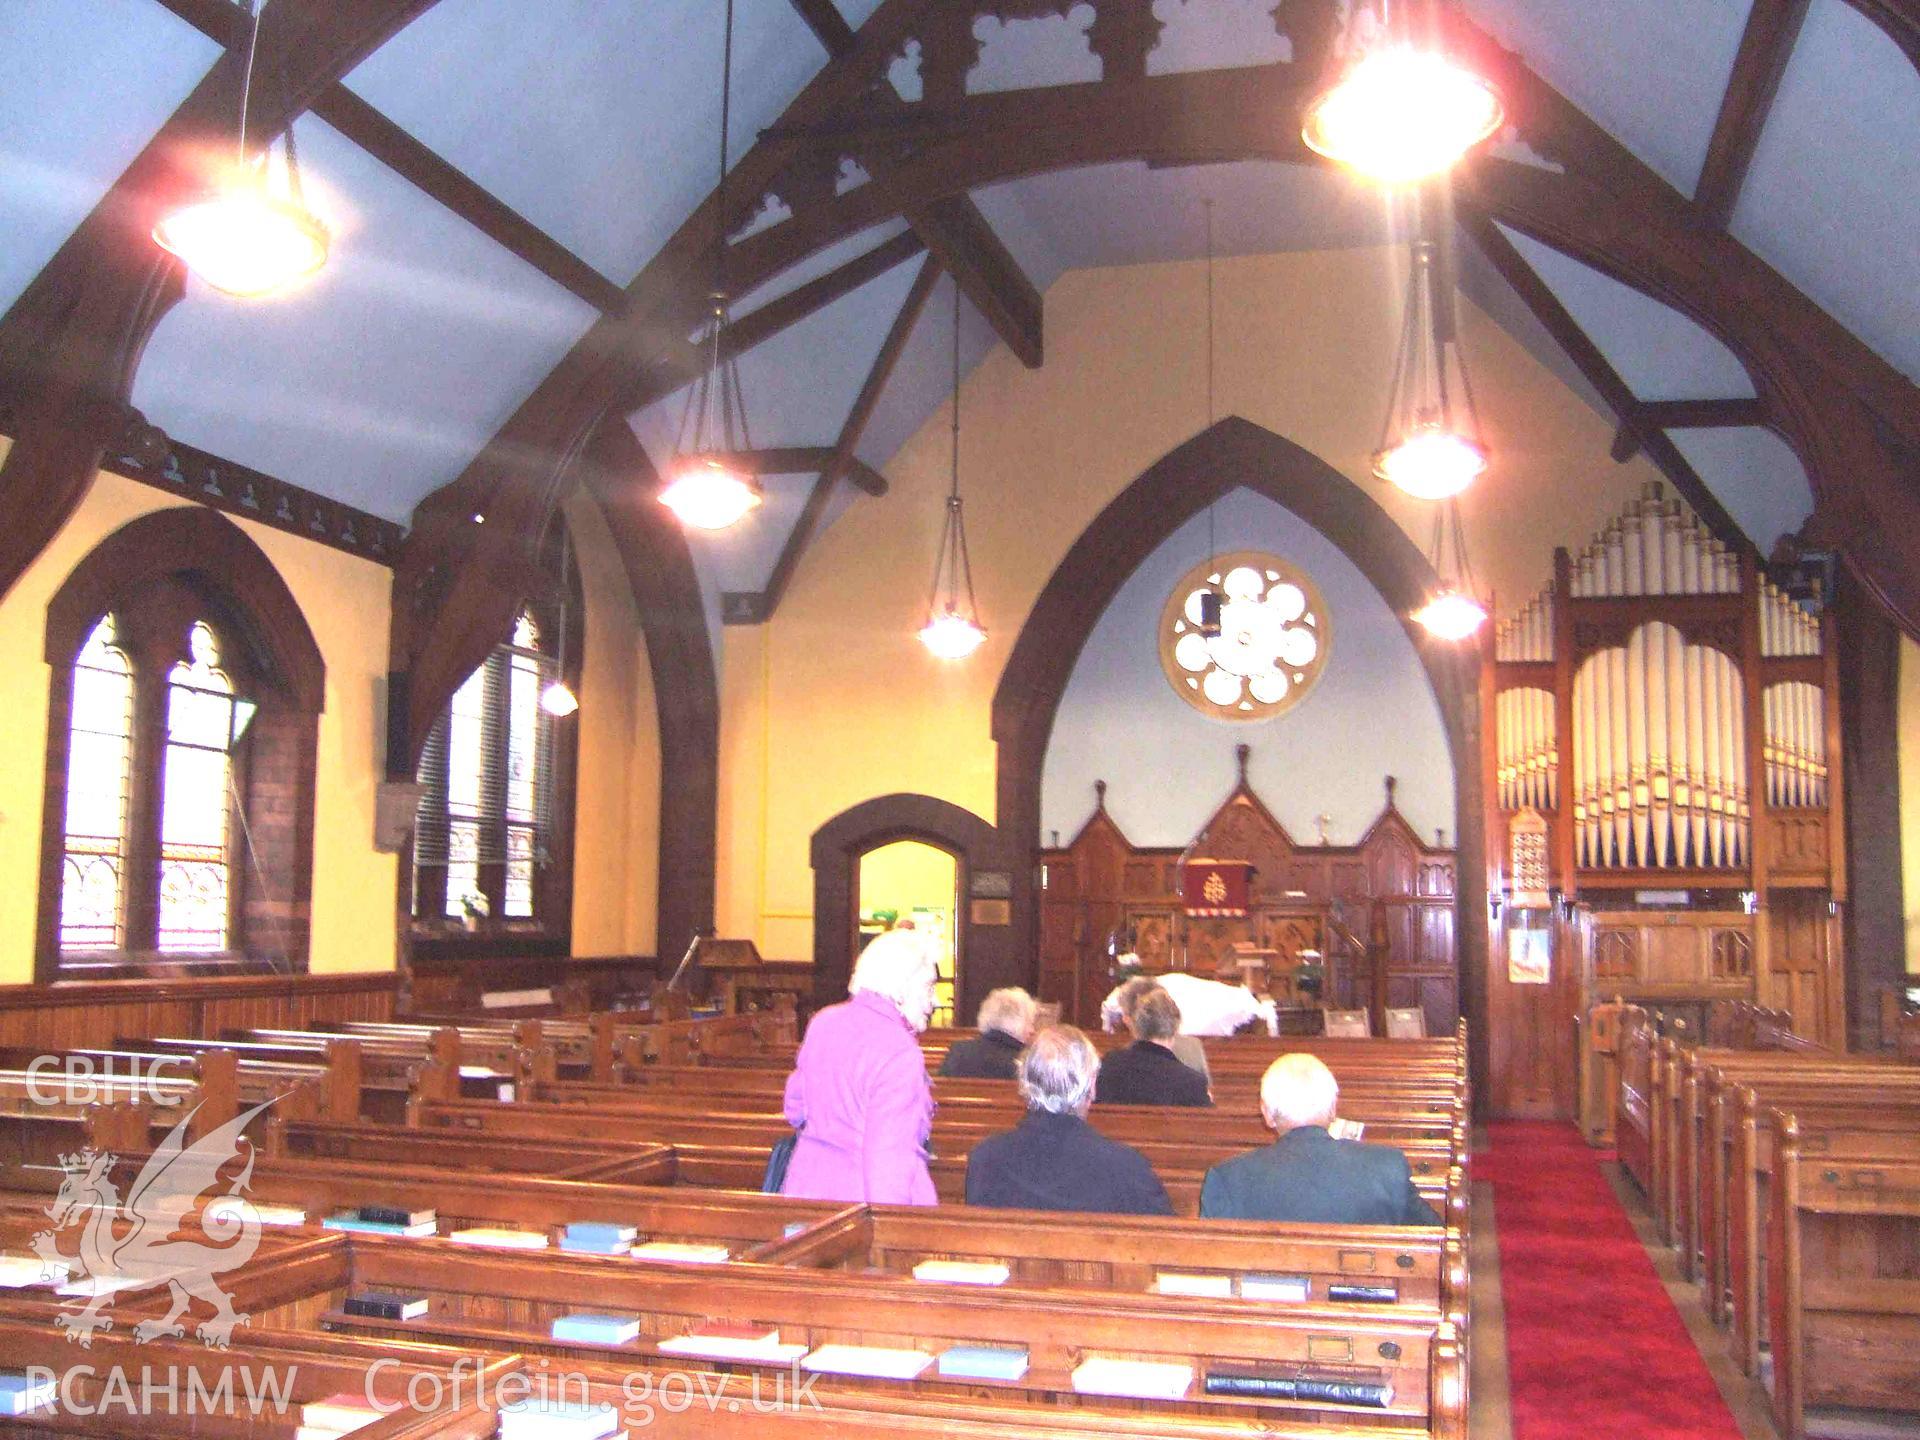 Interior looking NE towards the pulpit.